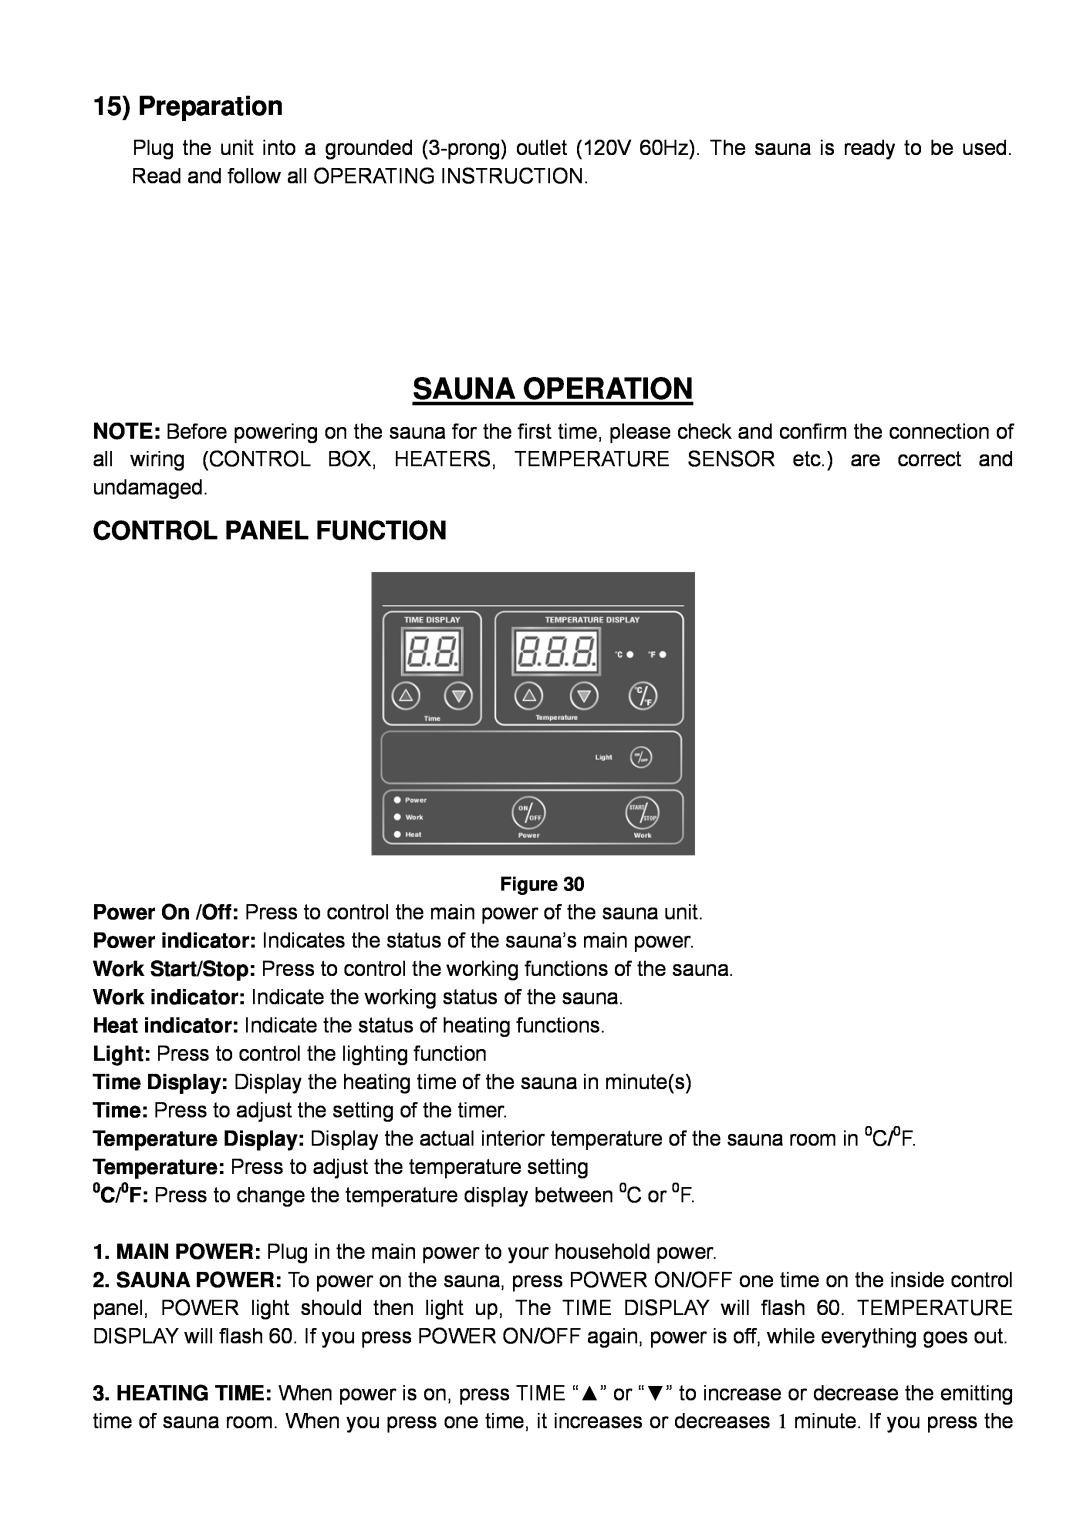 Keys Fitness BS-9101 owner manual Sauna Operation, Preparation, Control Panel Function 